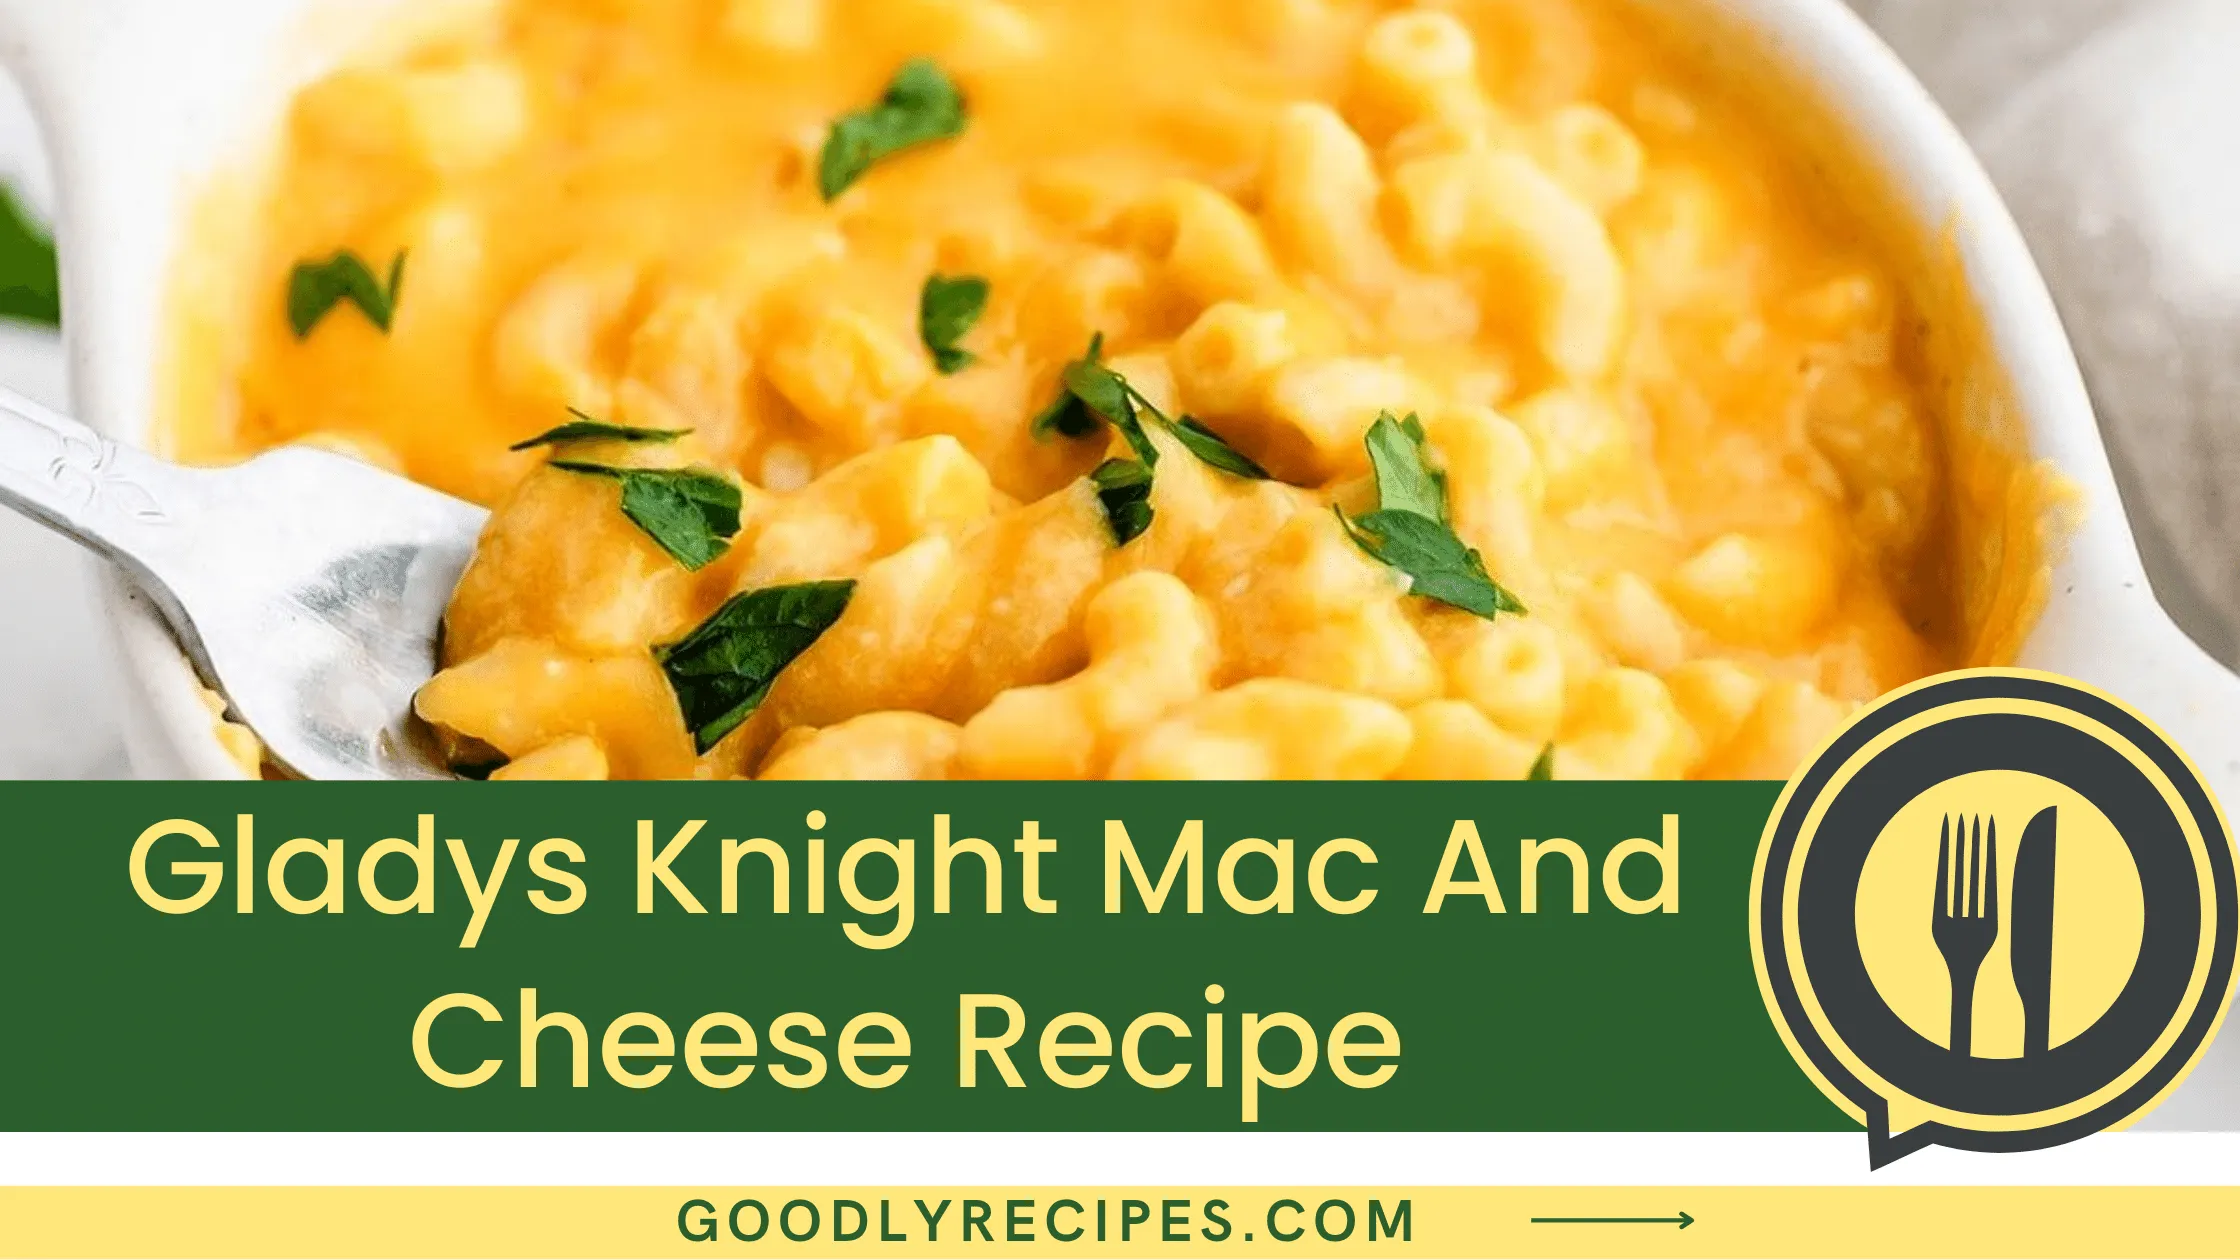 Gladys Knight Mac And Cheese Recipe